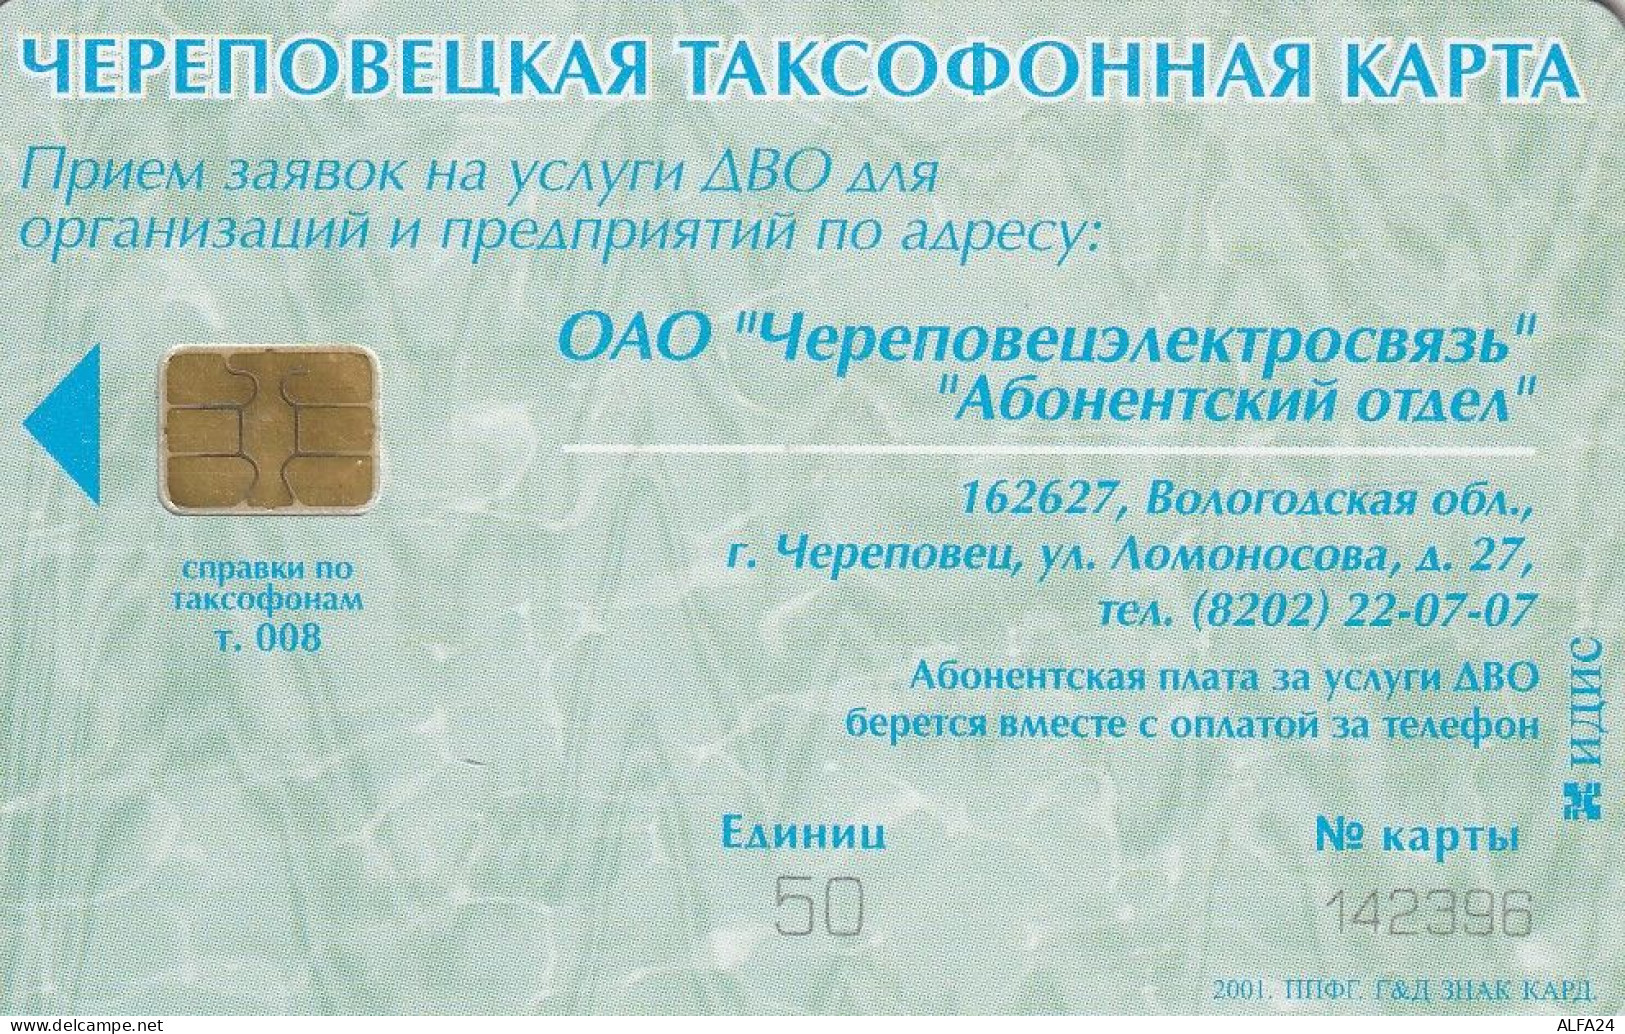 PHONE CARD RUSSIA Cherepovetselektrosvyaz - Cherepovets, Vologda (E9.14.7 - Russie